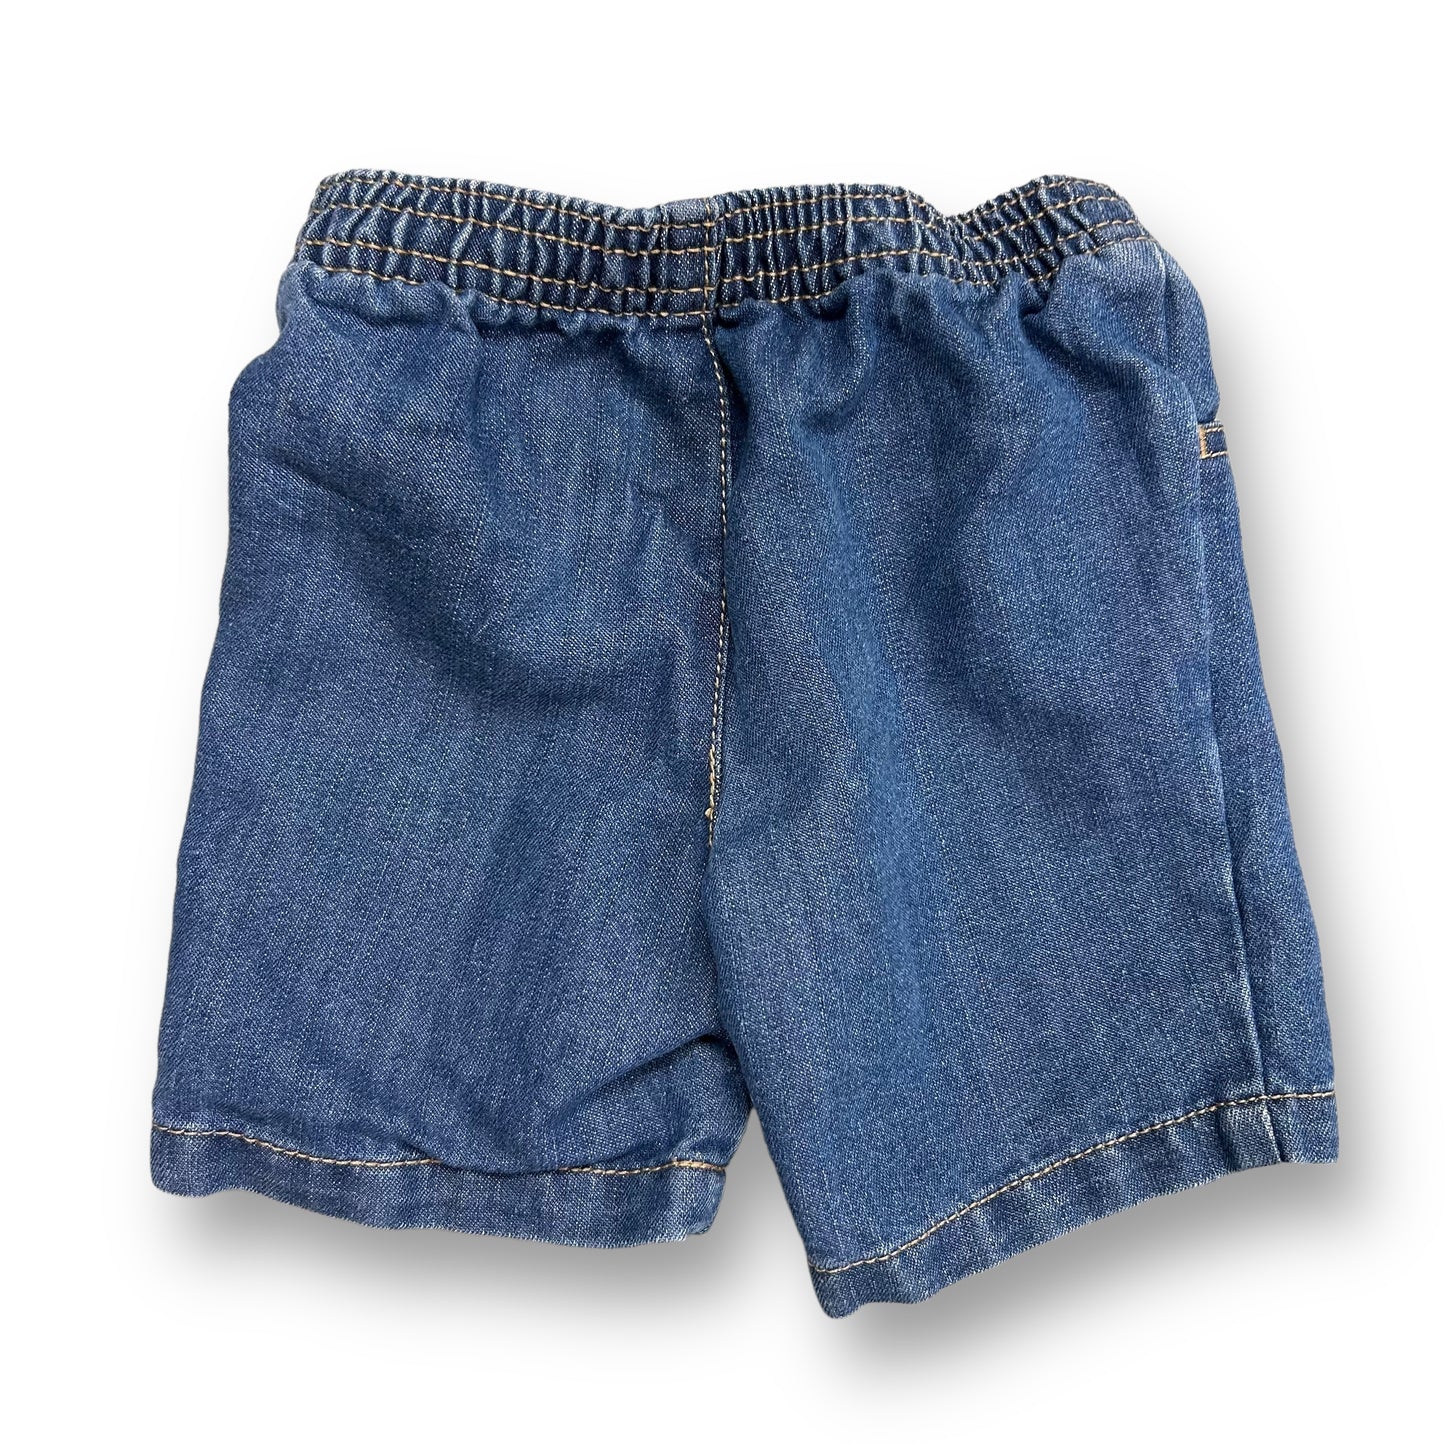 Boys Okie Dokie Size 18 Months Denim Elastic Band Pull-On Shorts